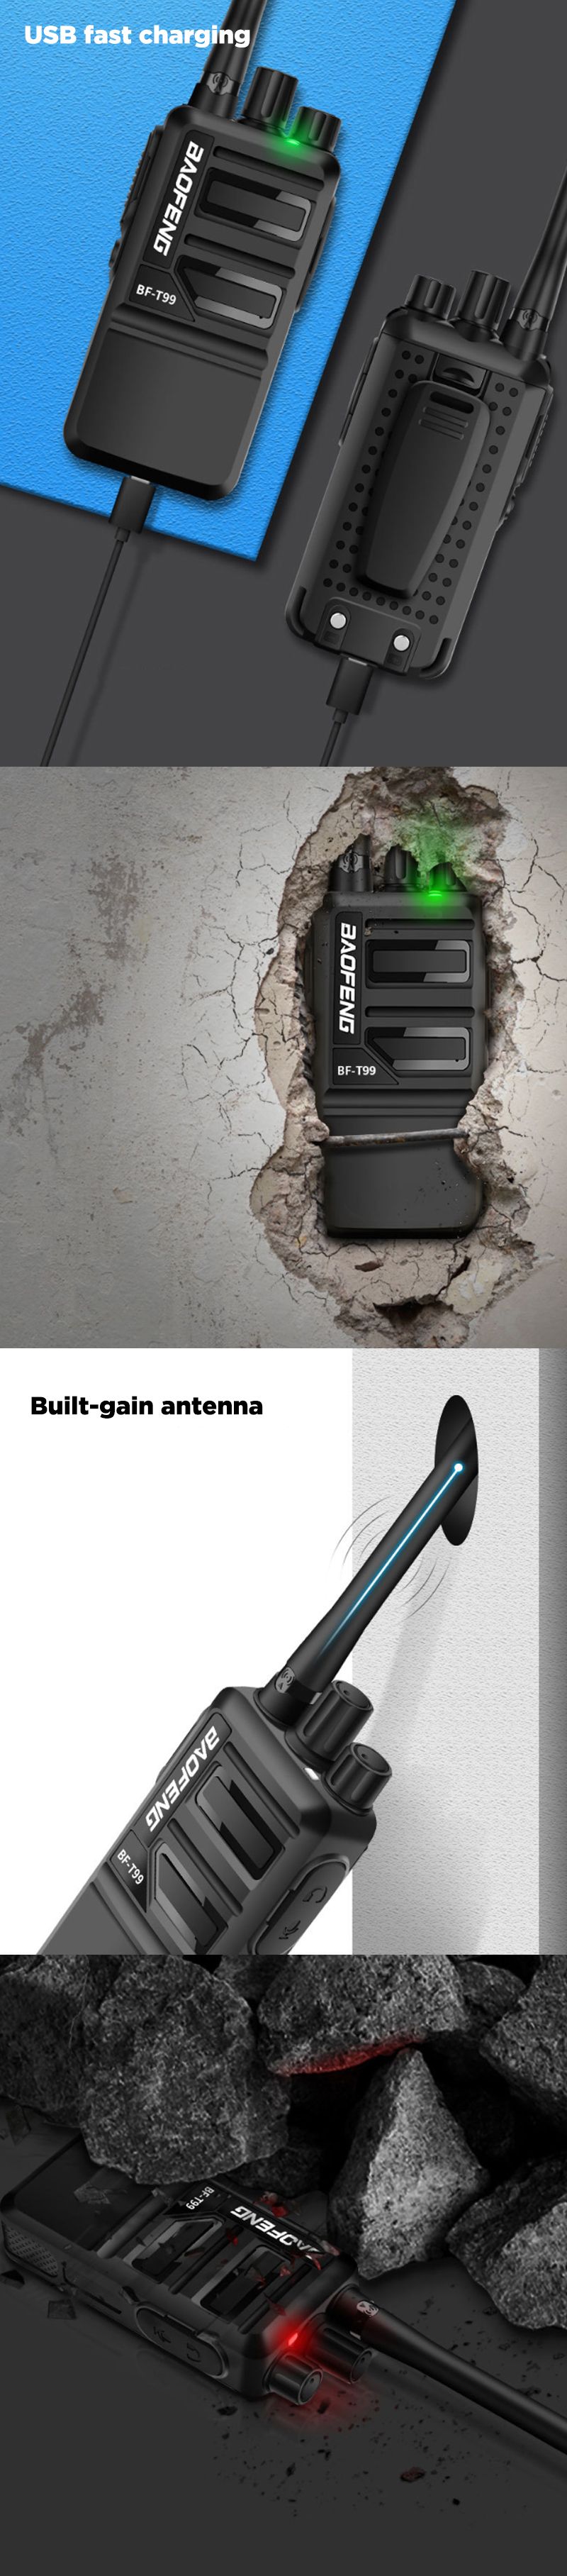 Baofeng-T99-II-5W-2800mAh-16-Channel-Ultra-Thin-Handheld-Walkie-Talkie-USB-Charging-Outdoor-Hiking-D-1598657